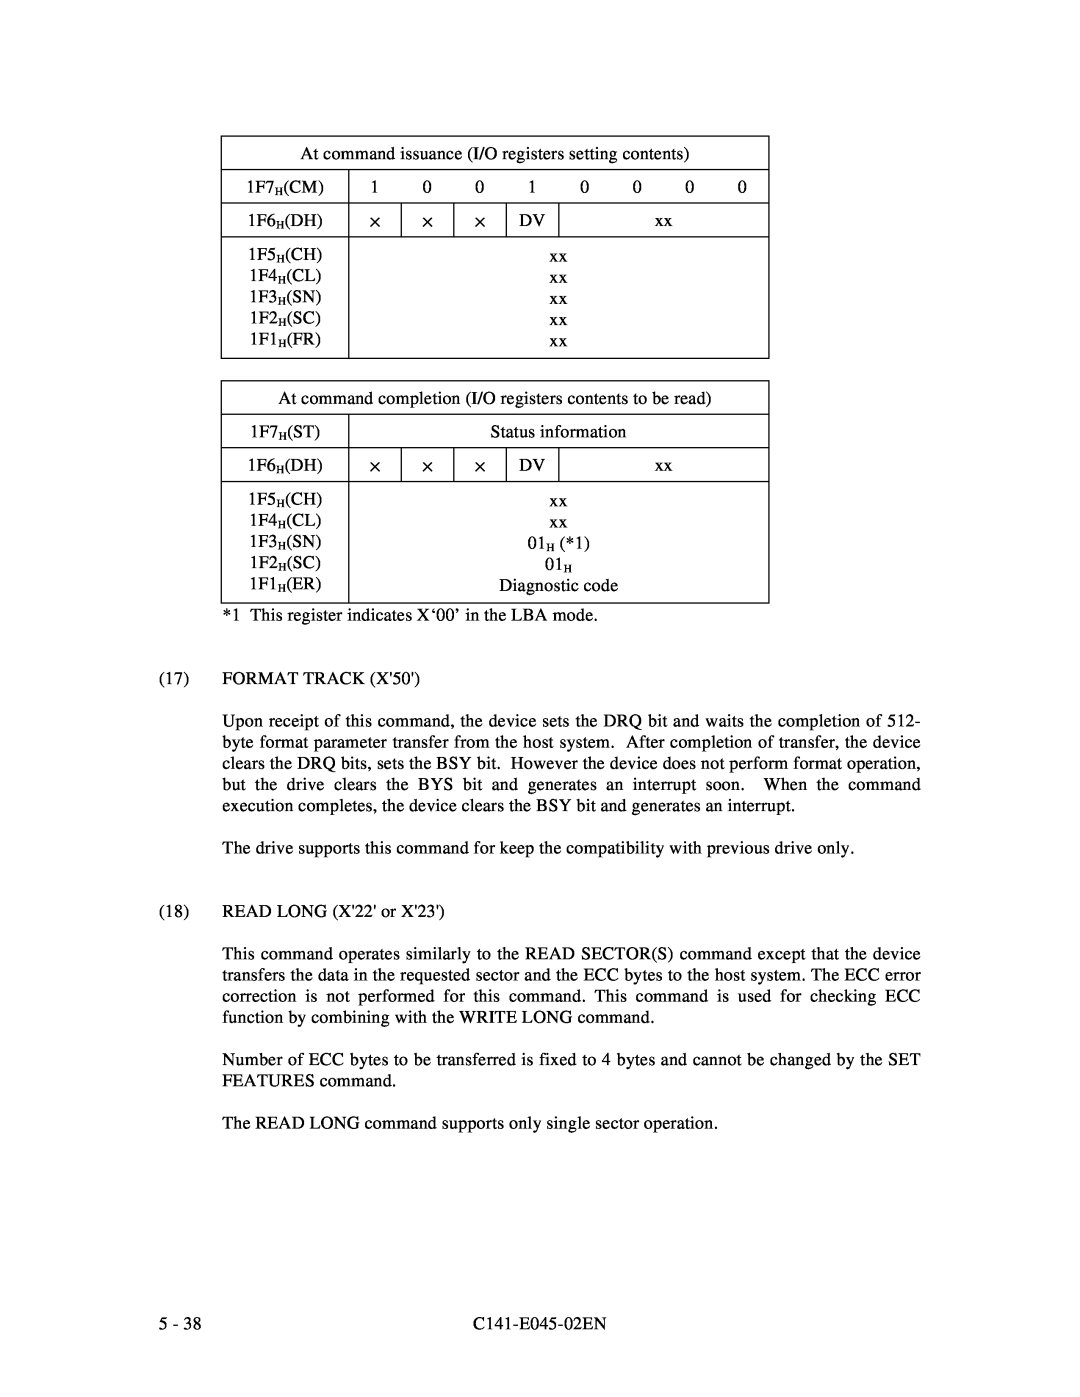 Fujitsu MPB3021AT At command issuance I/O registers setting contents, 1F7 HCM, 1F6 HDH, 1F5 HCH, 1F4 HCL, 1F3 HSN, 1F2 HSC 